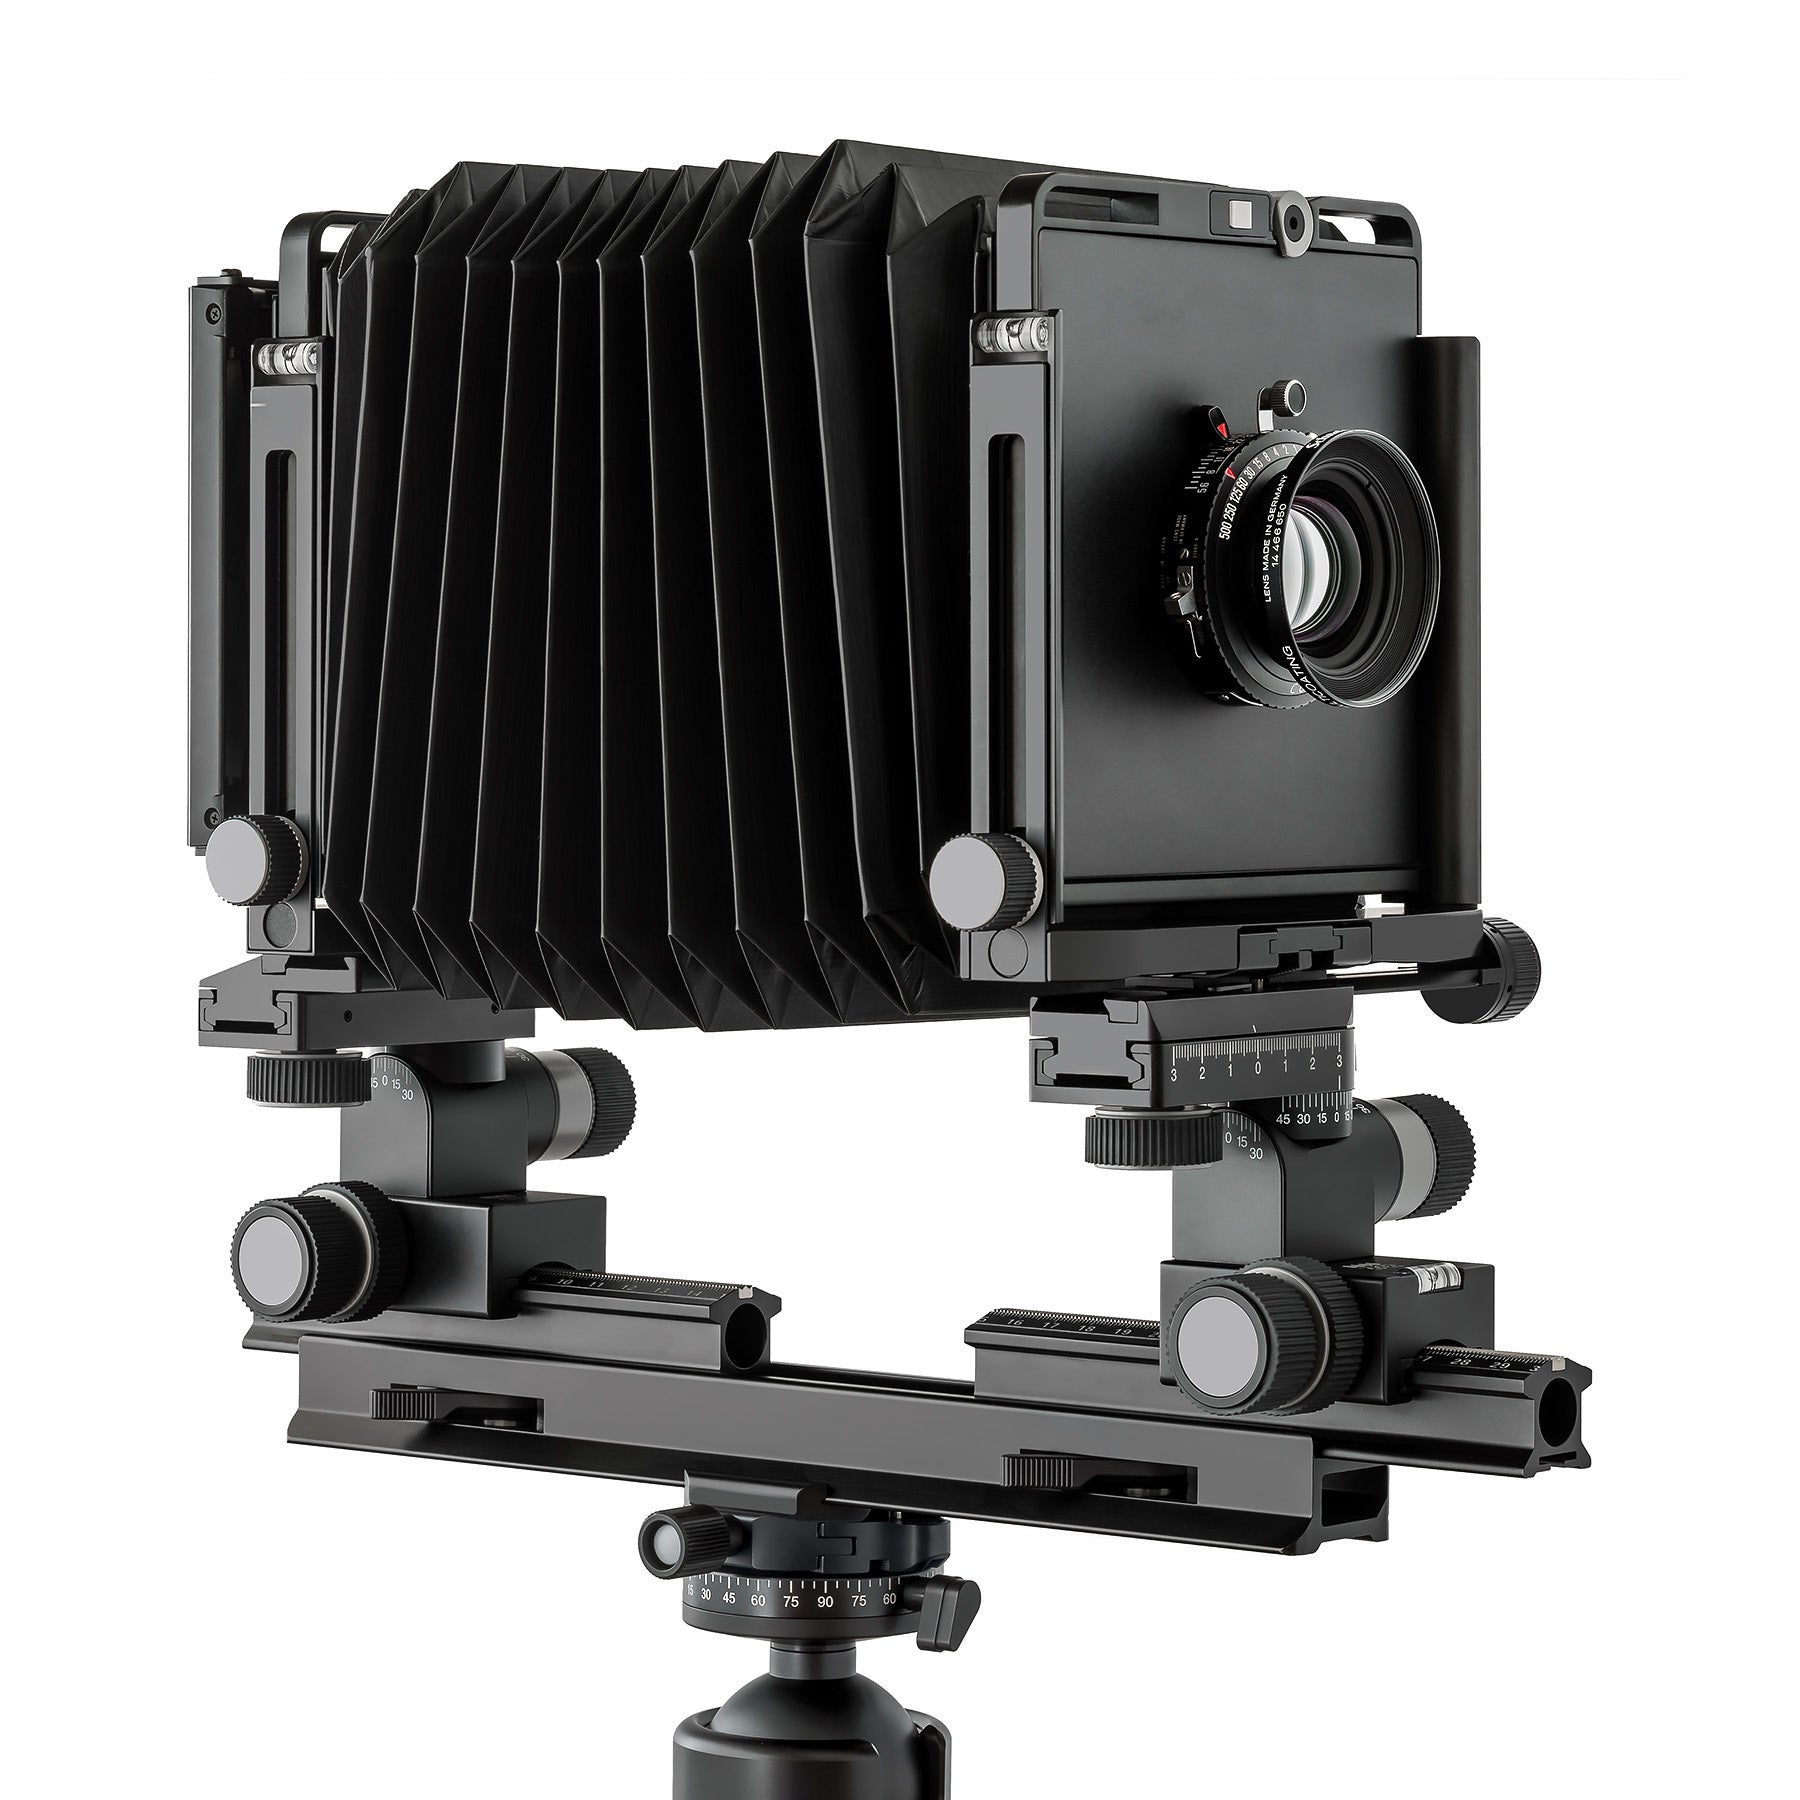 F-Metric 4X5 View Camera